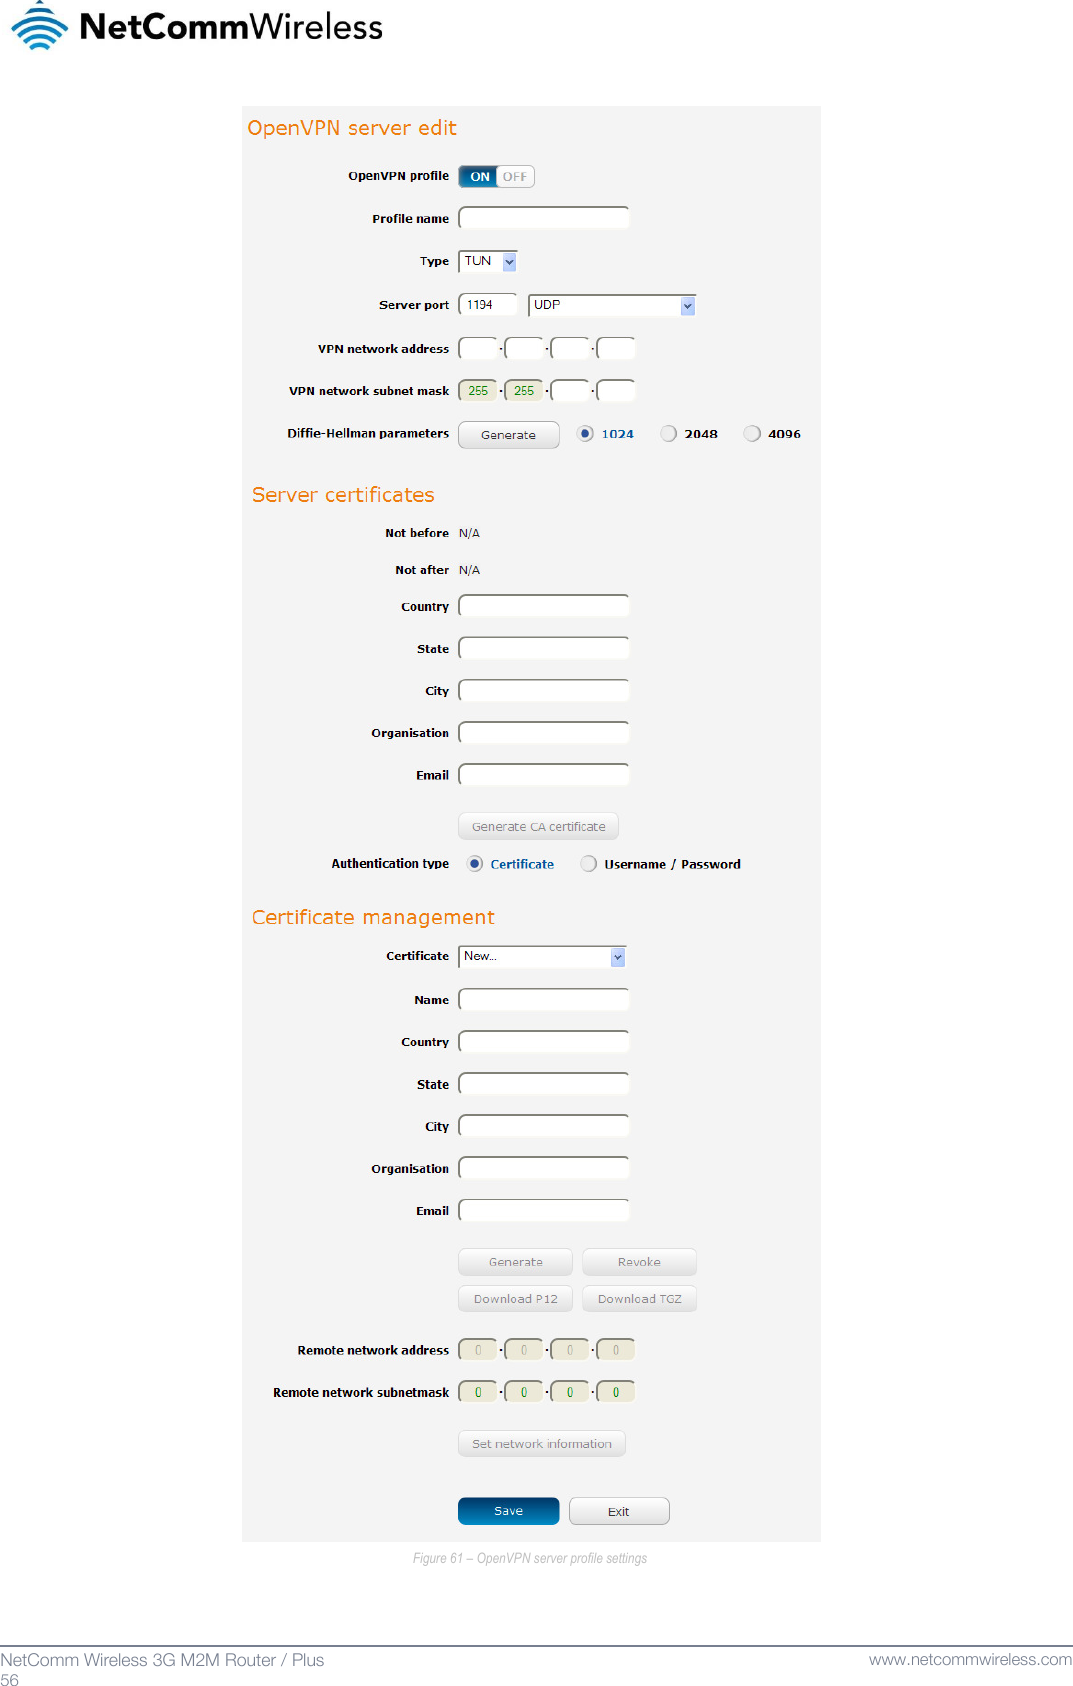   56  NetComm Wireless 3G M2M Router / Plus   www.netcommwireless.com  Figure 61 – OpenVPN server profile settings   